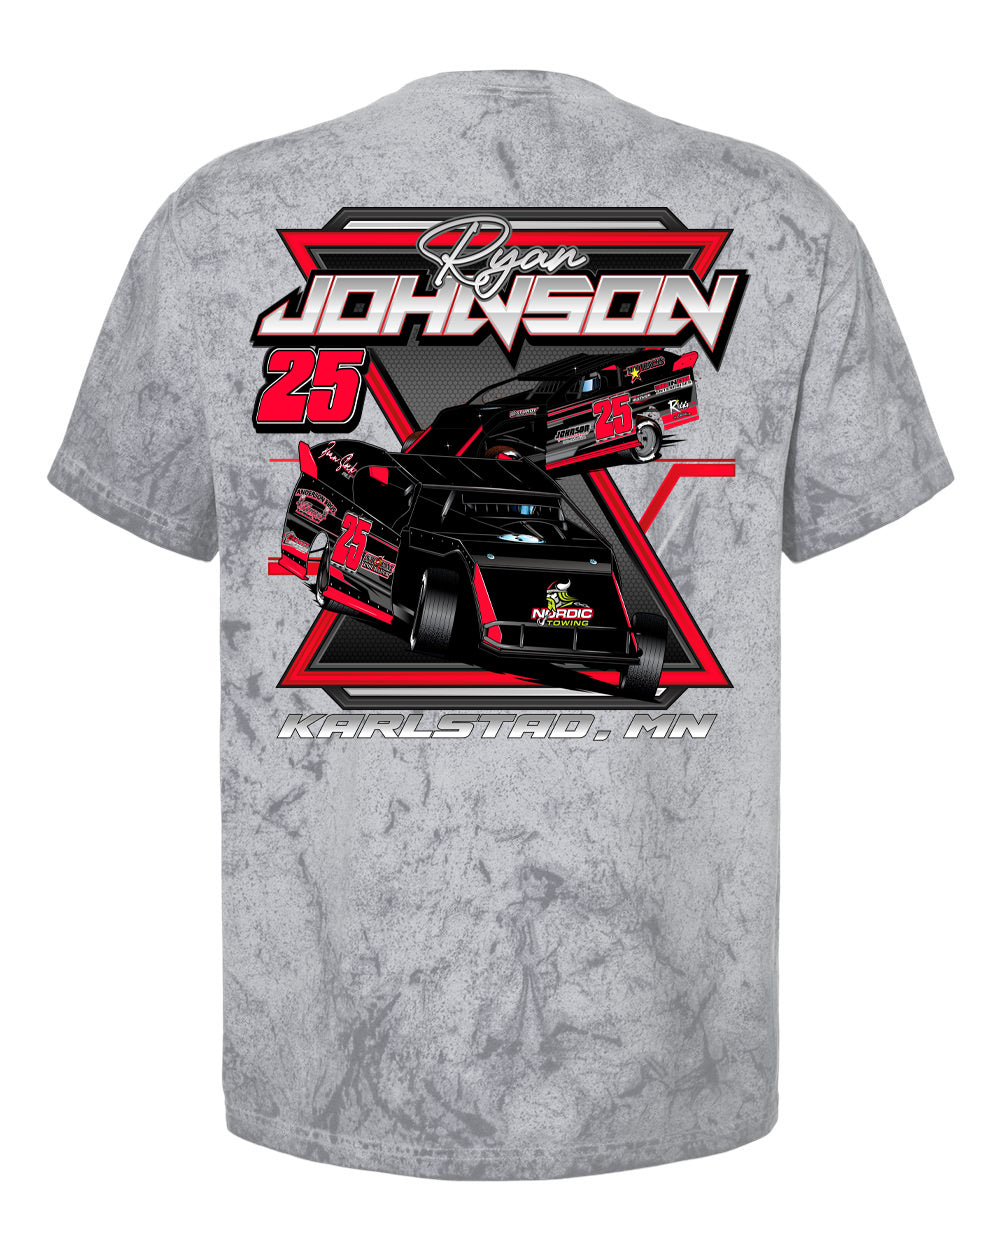 Ryan Johnson Racing T-shirt Smoke